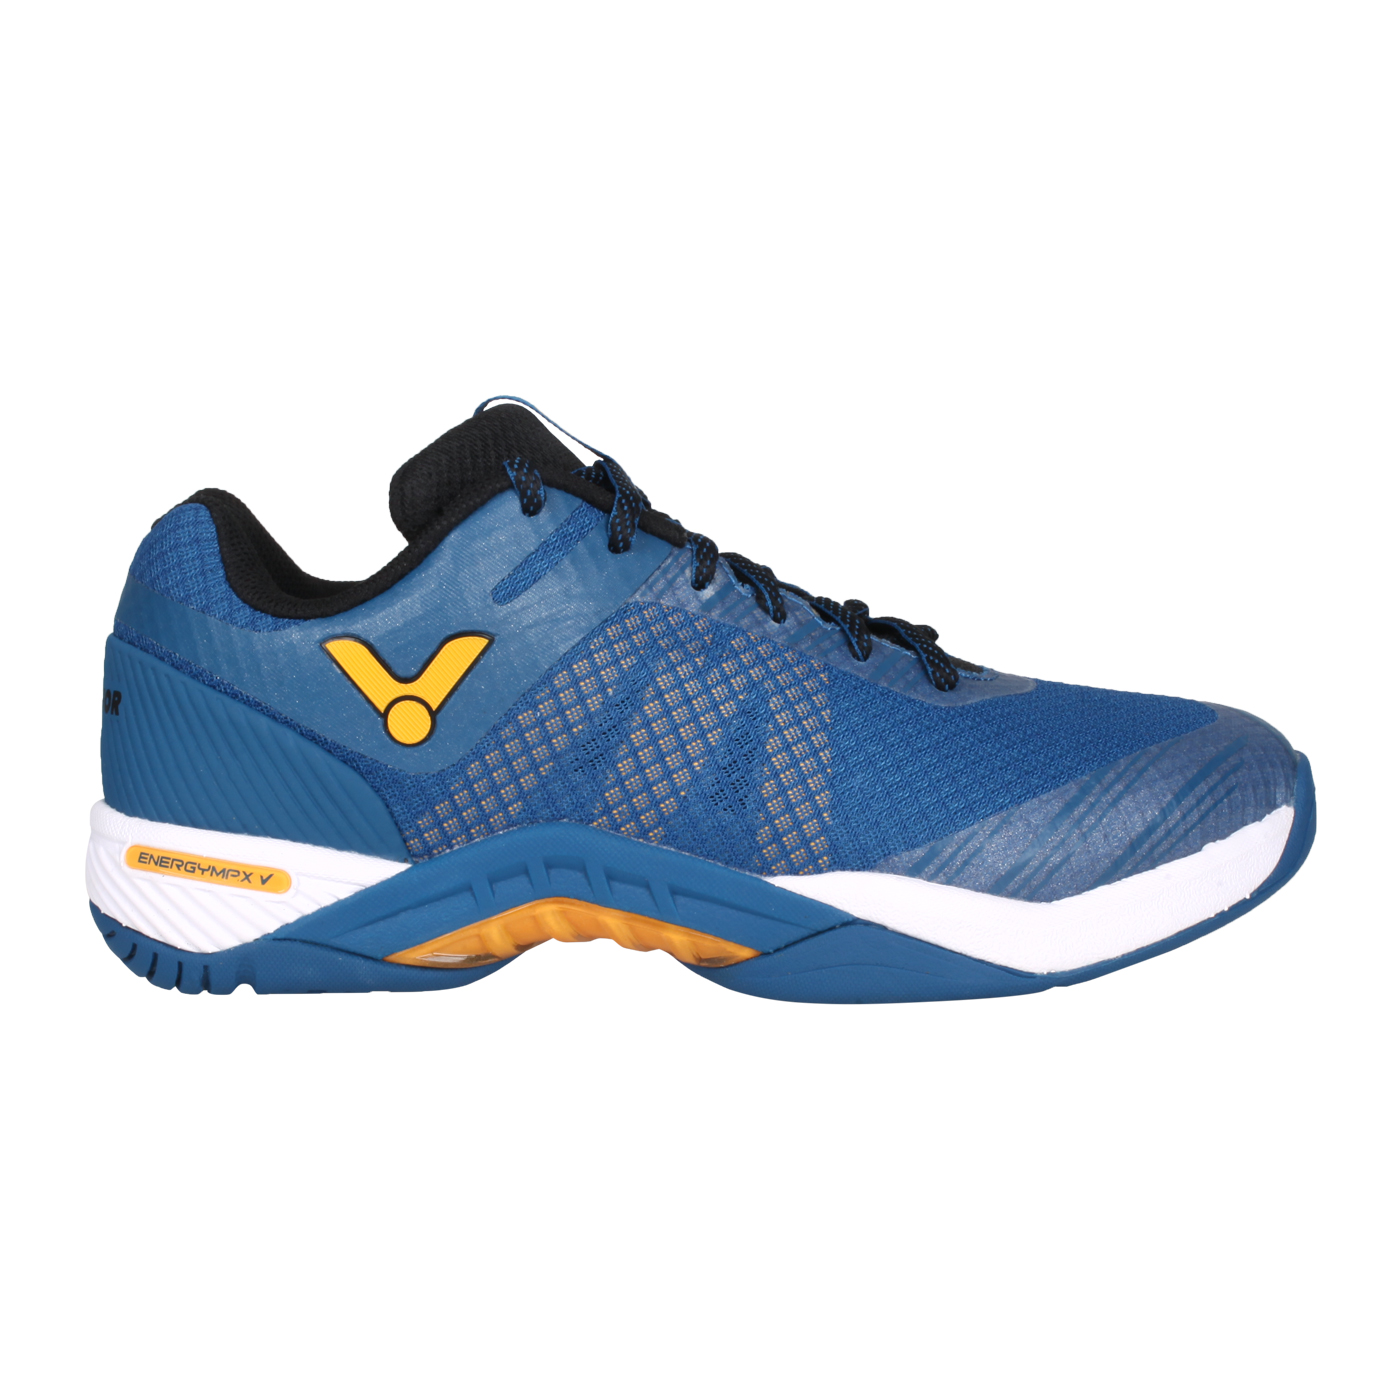 VICTOR 男款羽球鞋 S82-BE - 藍黃